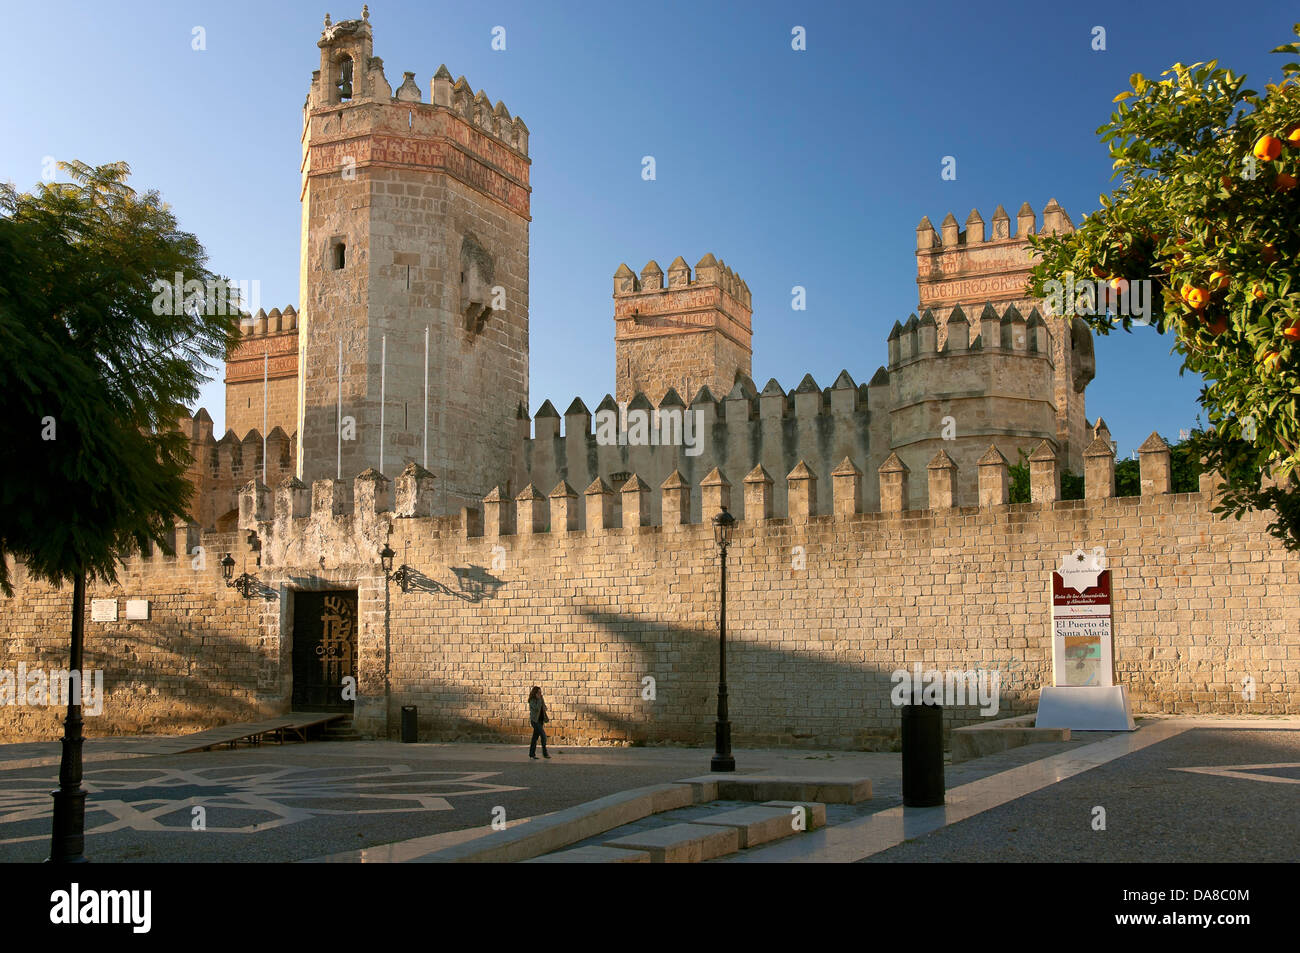 San Marcos - castello del XIV secolo, El Puerto de Santa Maria, Cadice-provincia, regione dell'Andalusia, Spagna, Europa Foto Stock